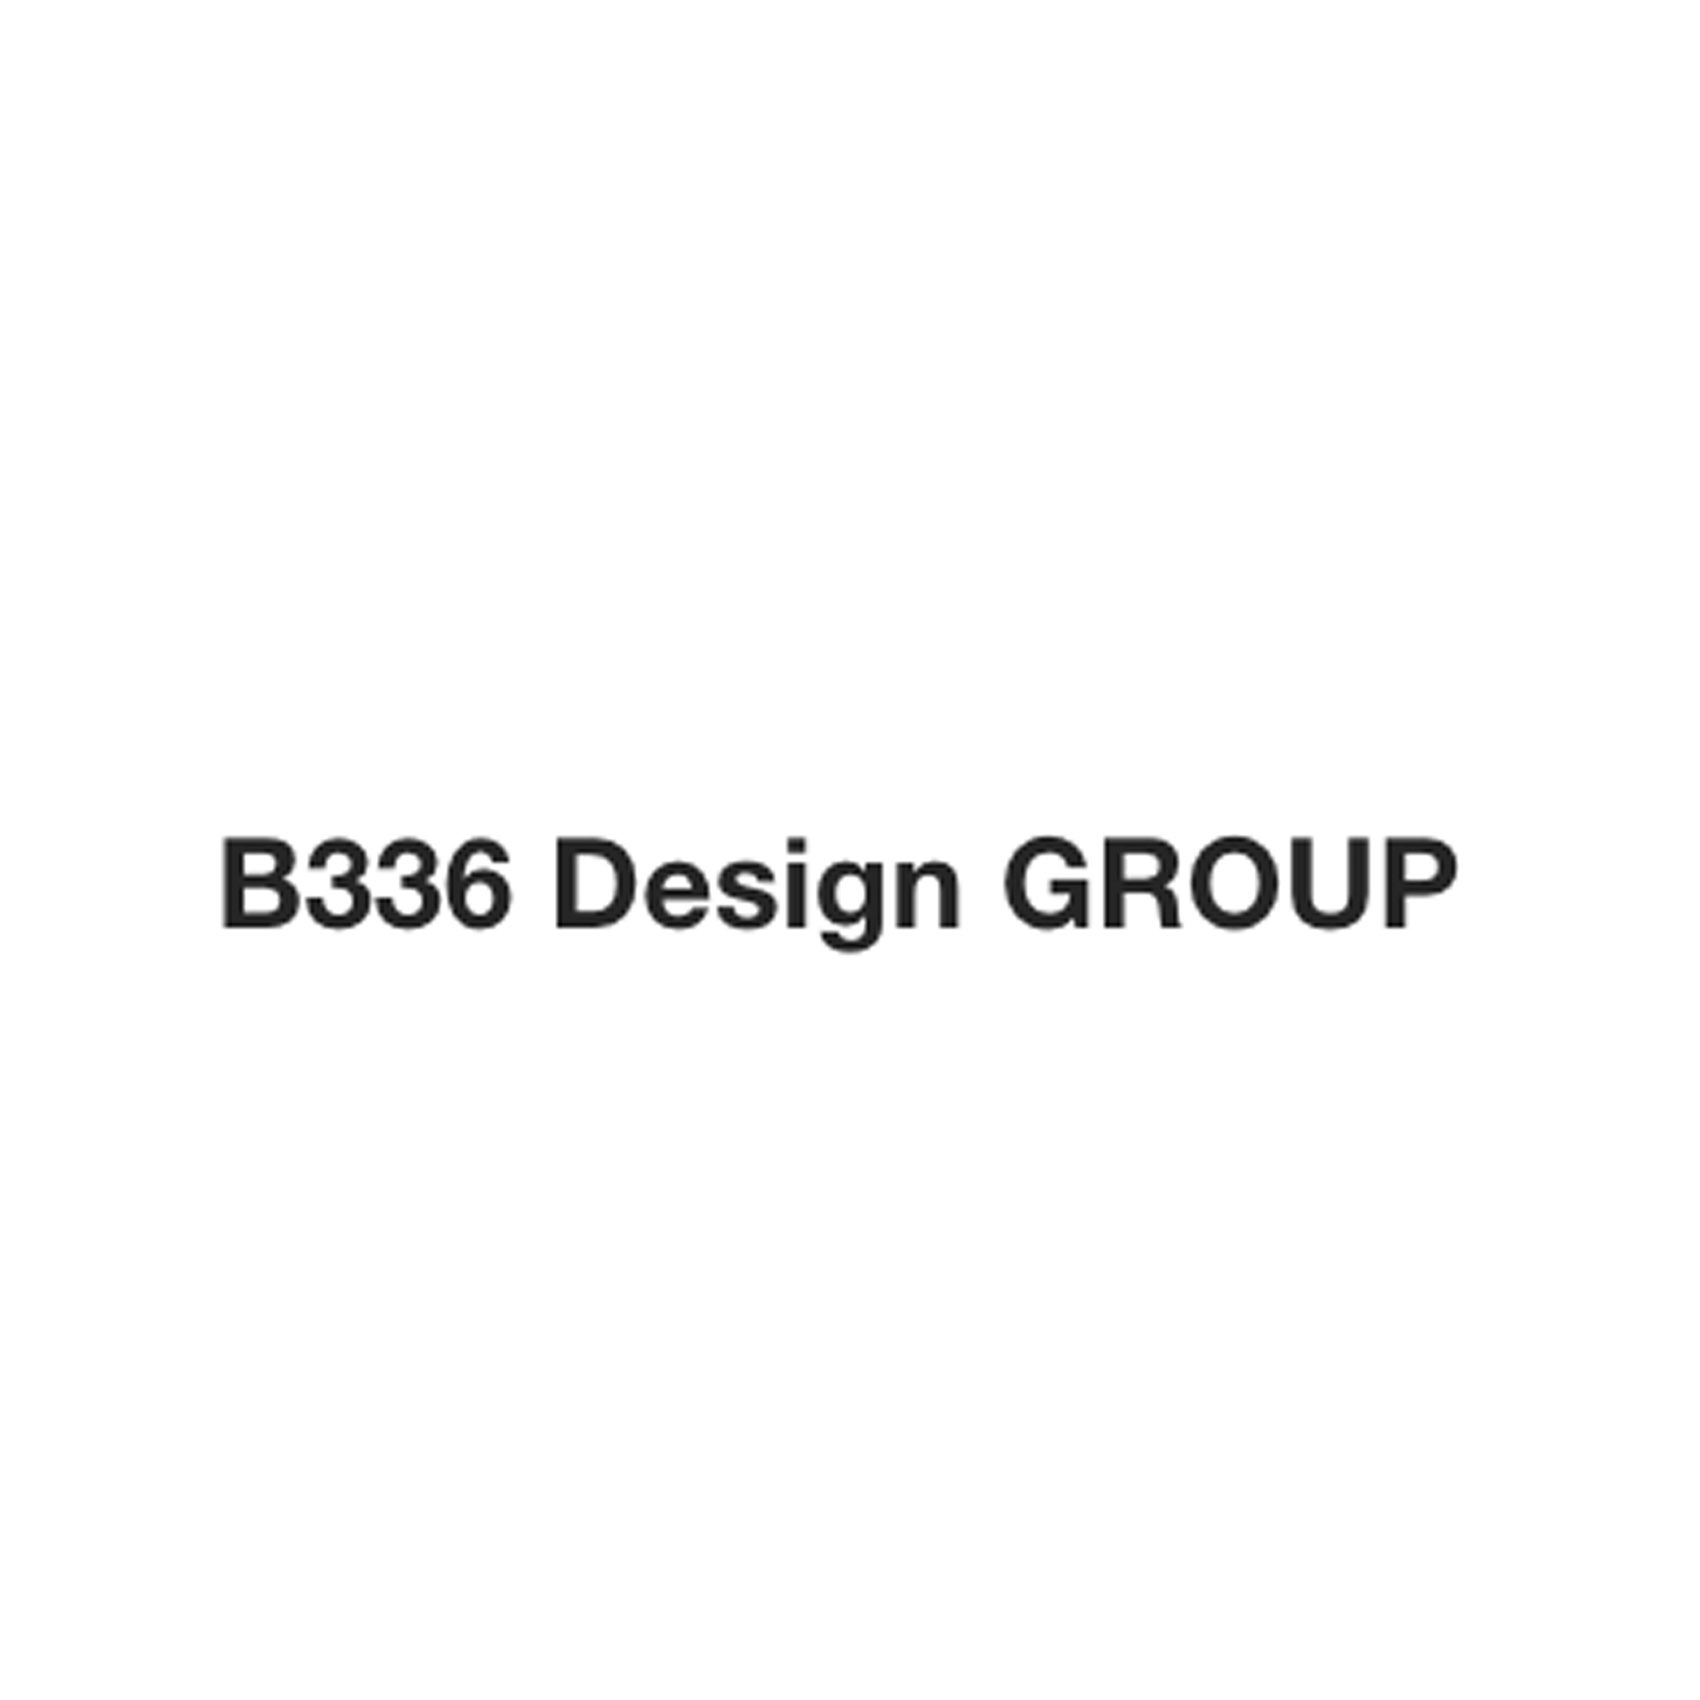 B336 Design Group